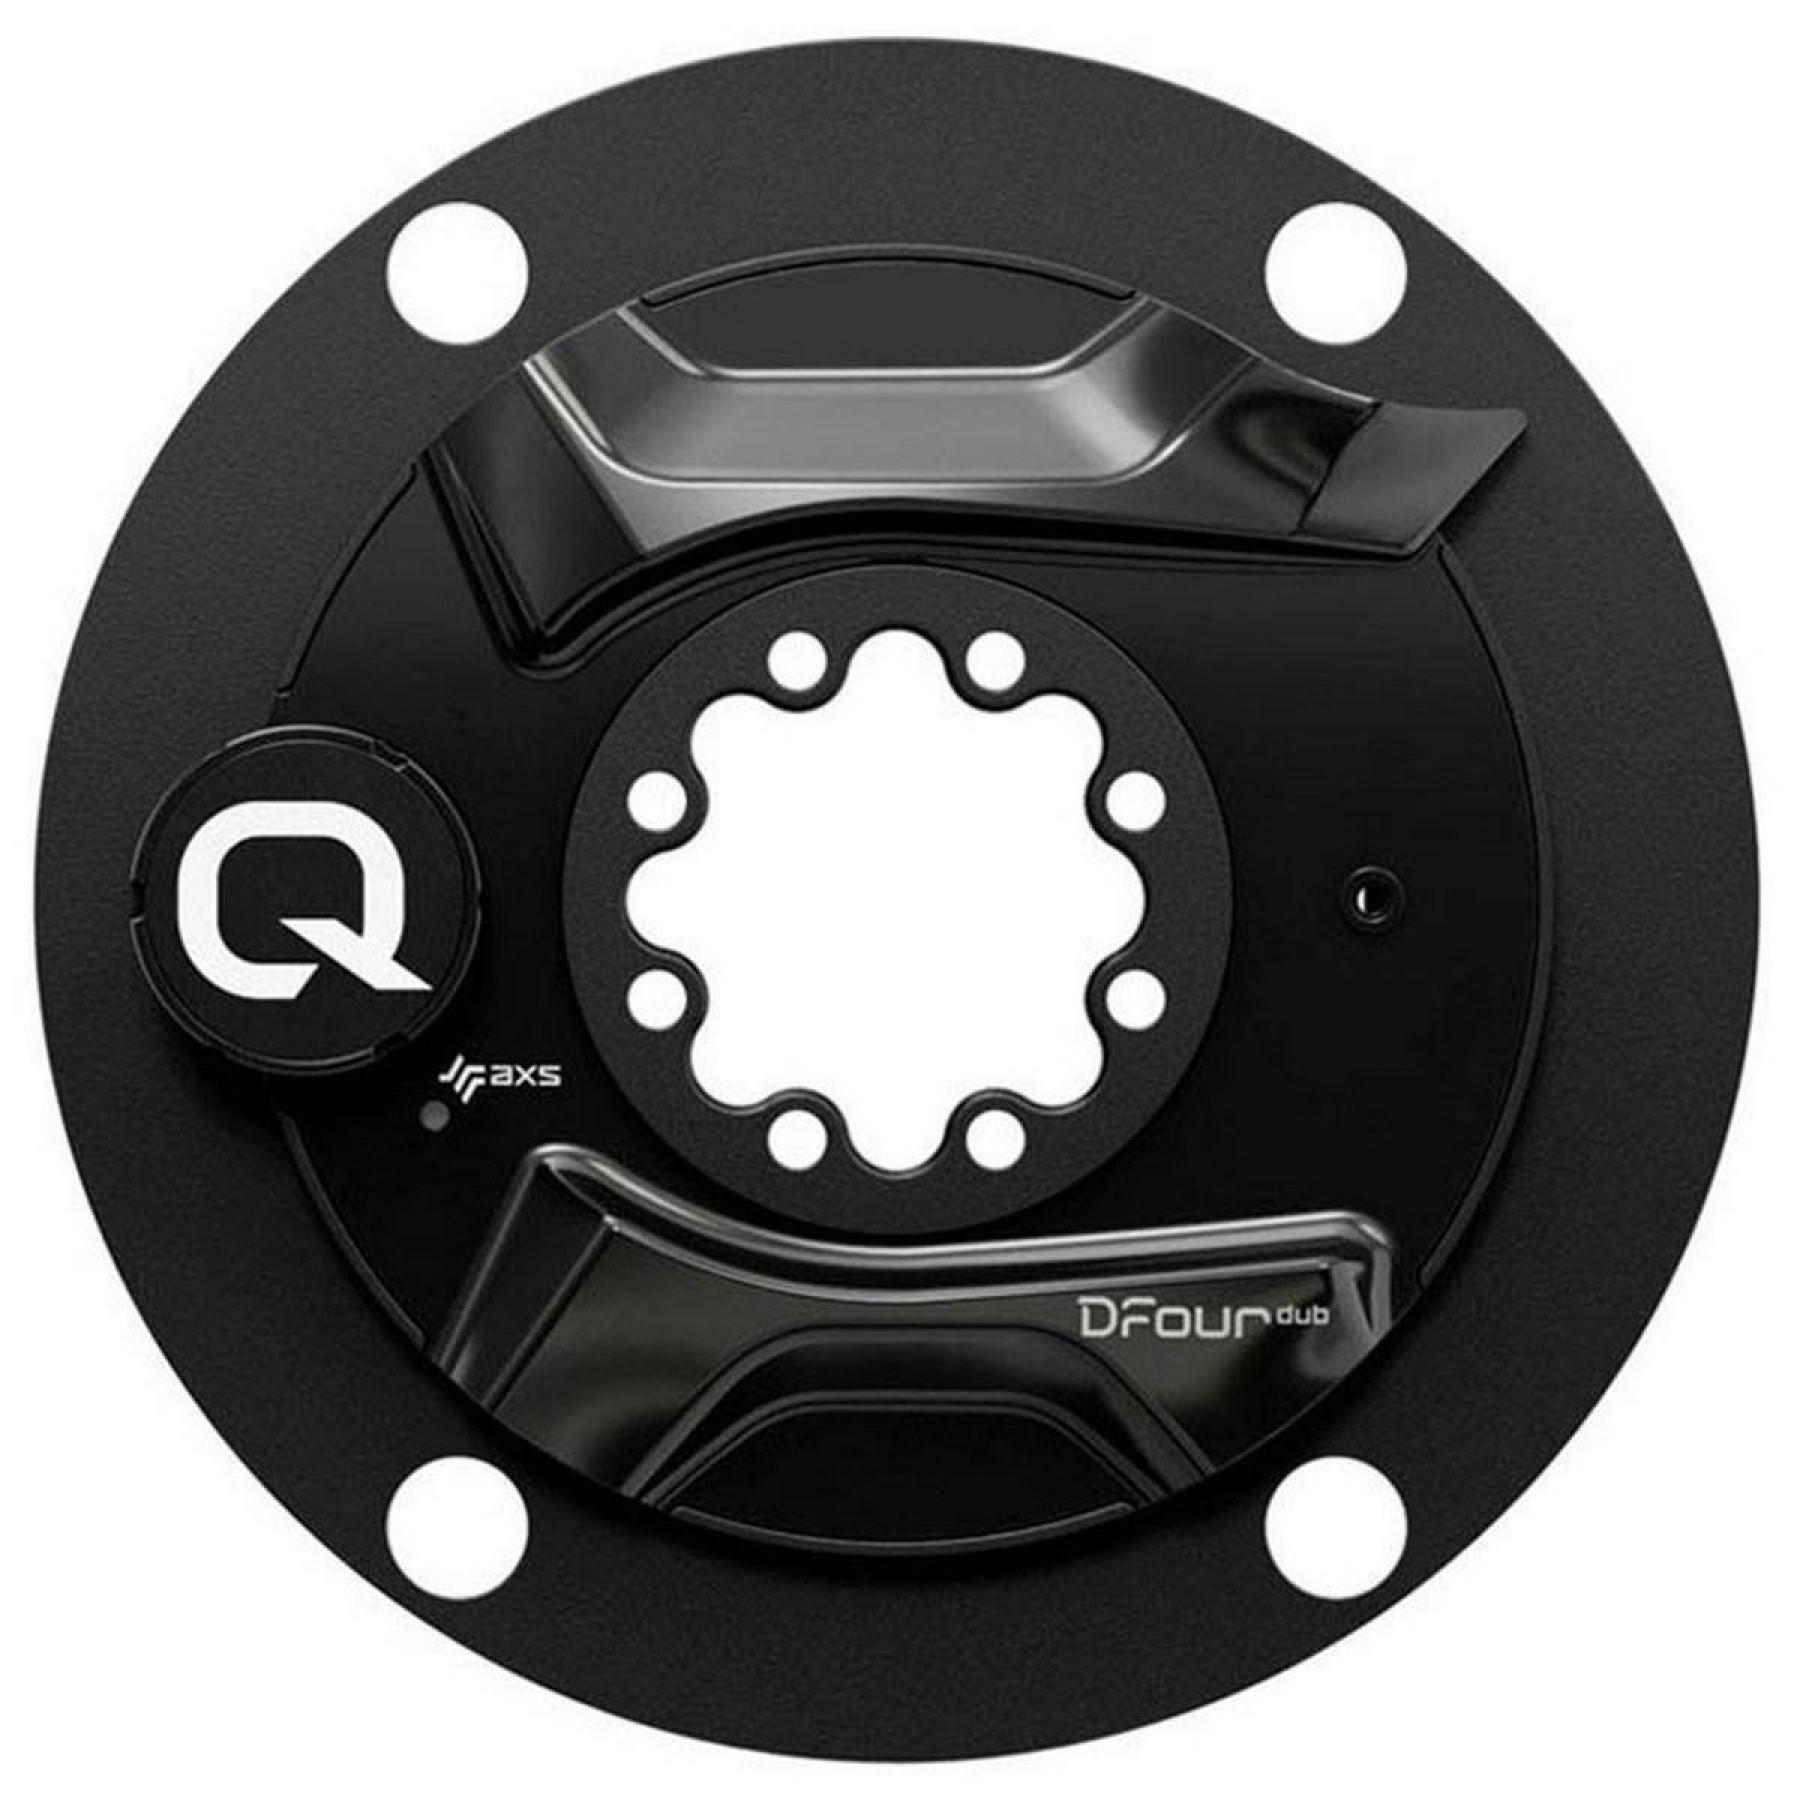 Power sensor Quarq Dfour dub 170mm 110BCD Shimano (BB not in)